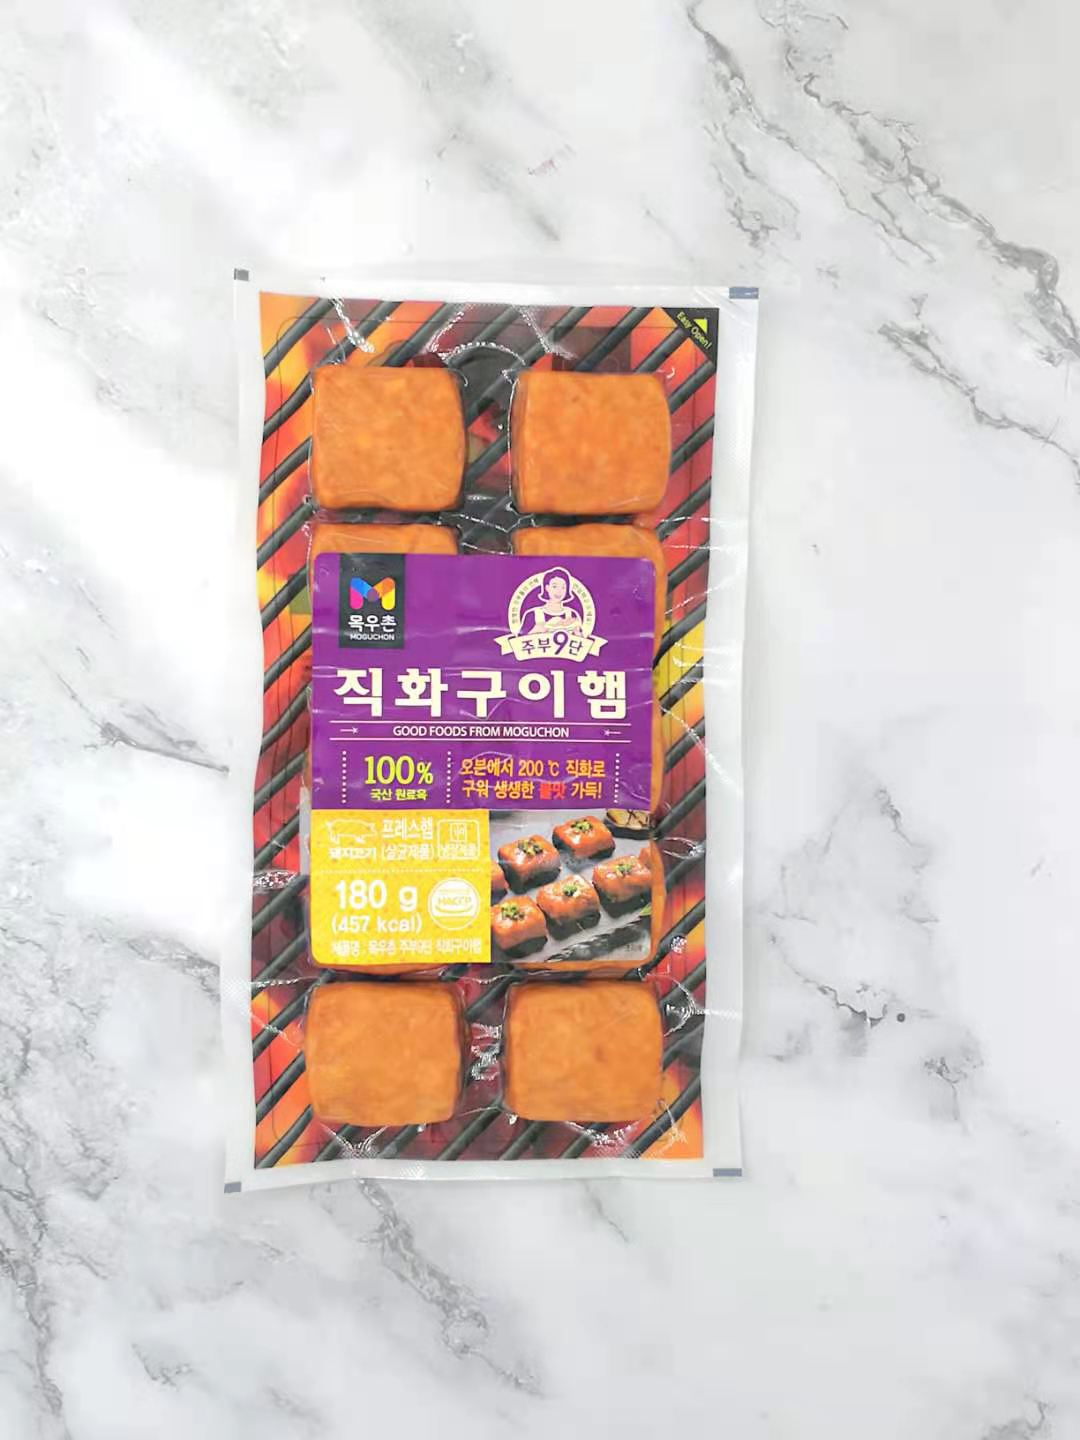 韓國冰鮮排骨肉香腸 (Korea Galbi Favor Sausage)